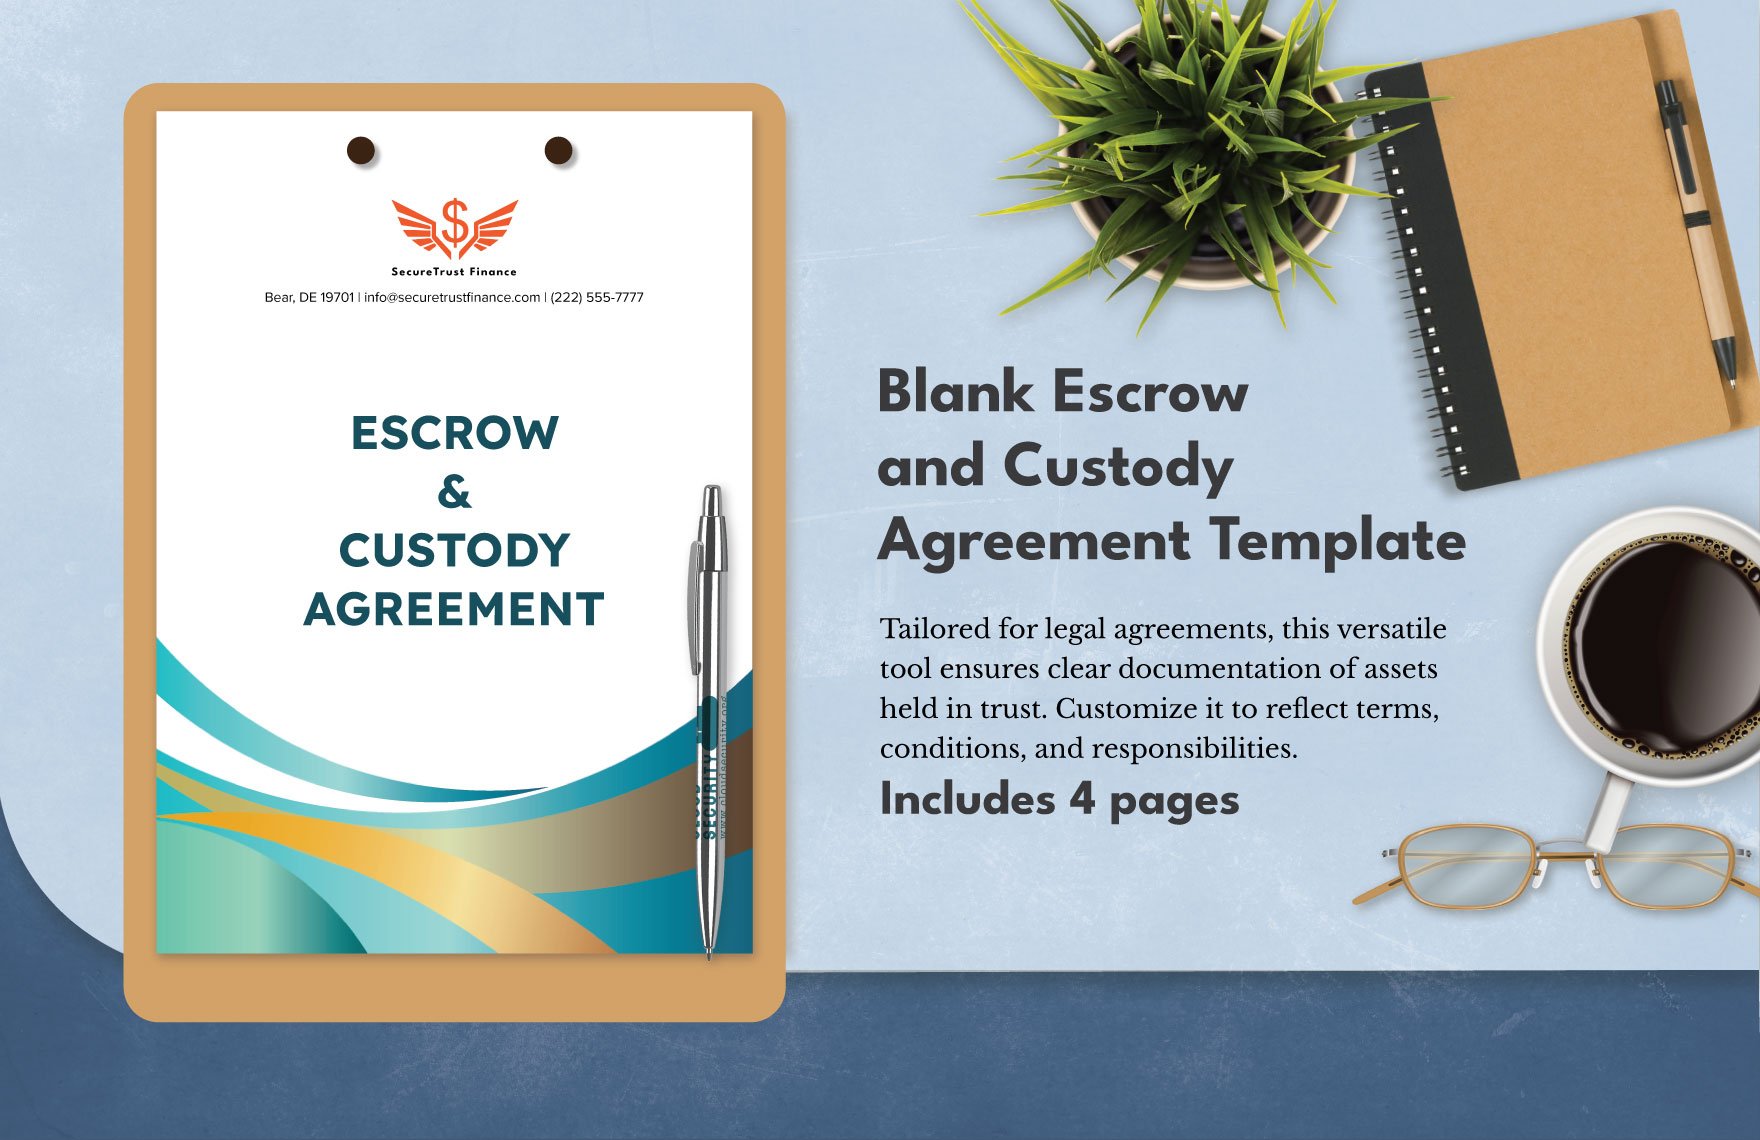 Blank Escrow and Custody Agreement Template